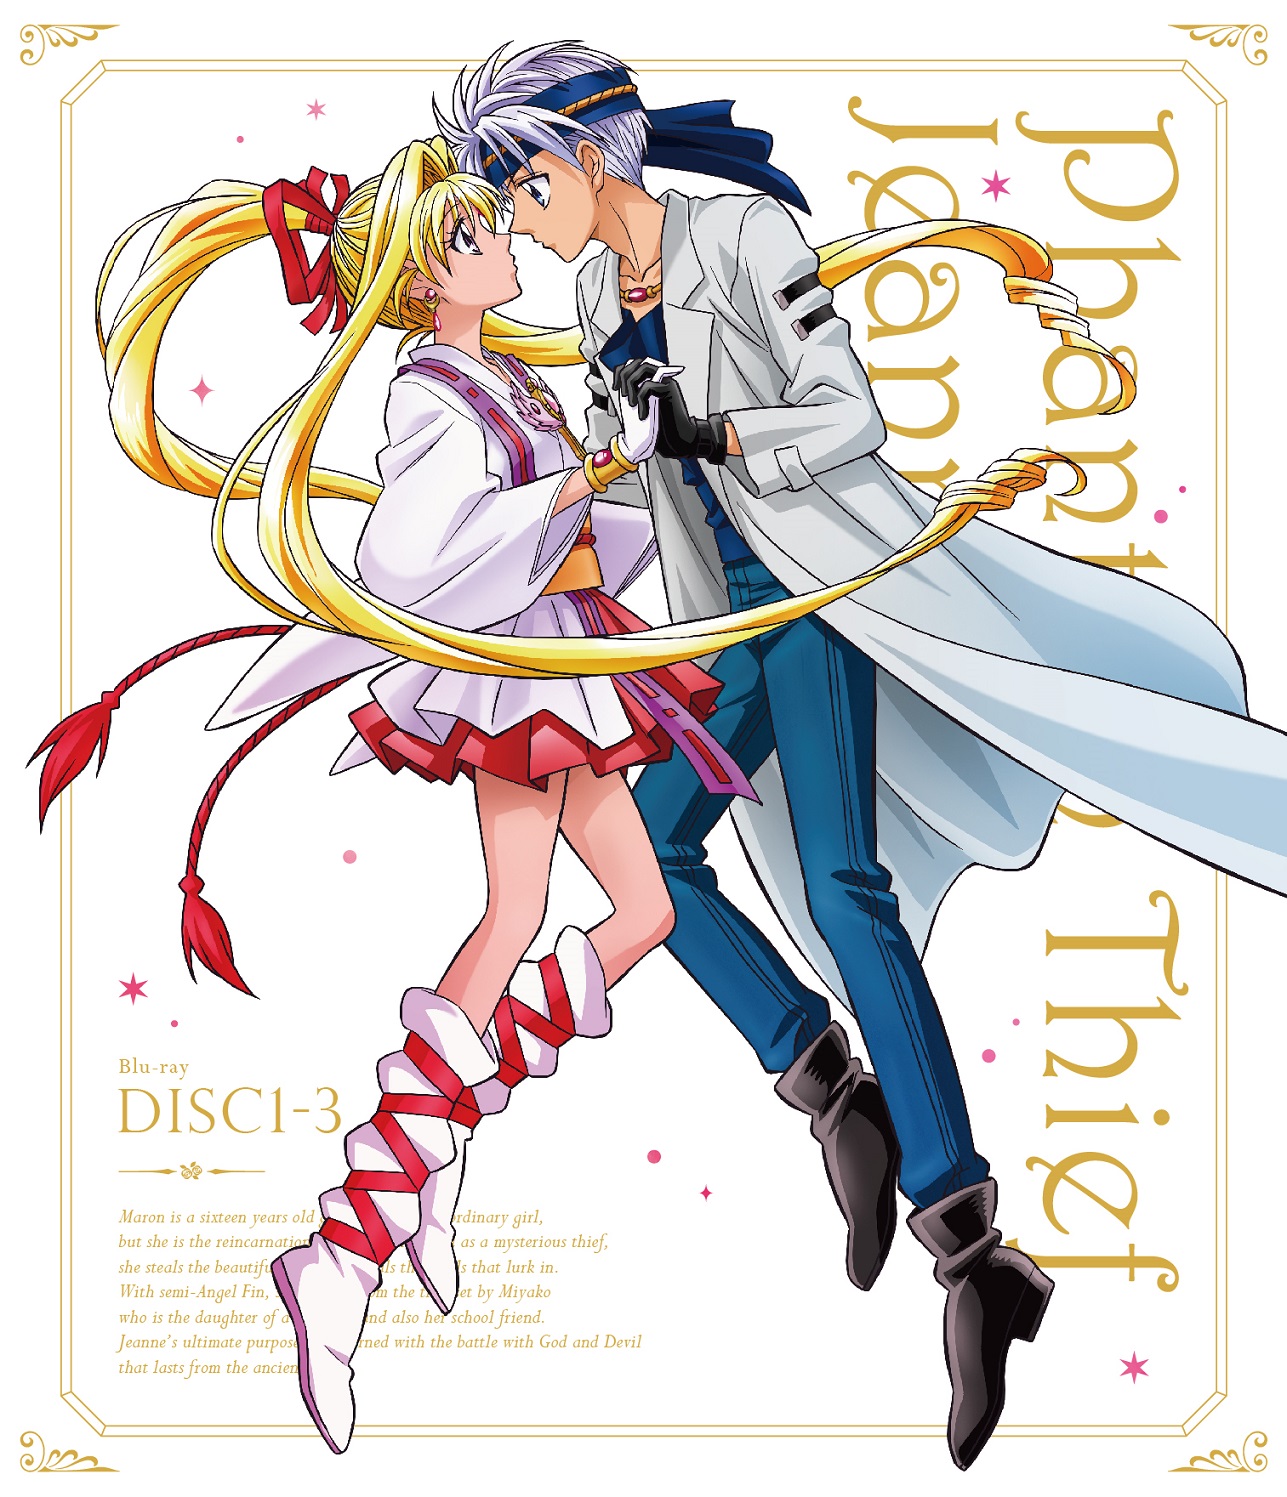 TVアニメ「神風怪盗ジャンヌ」Complete Blu-ray BOX2023.3.31発売